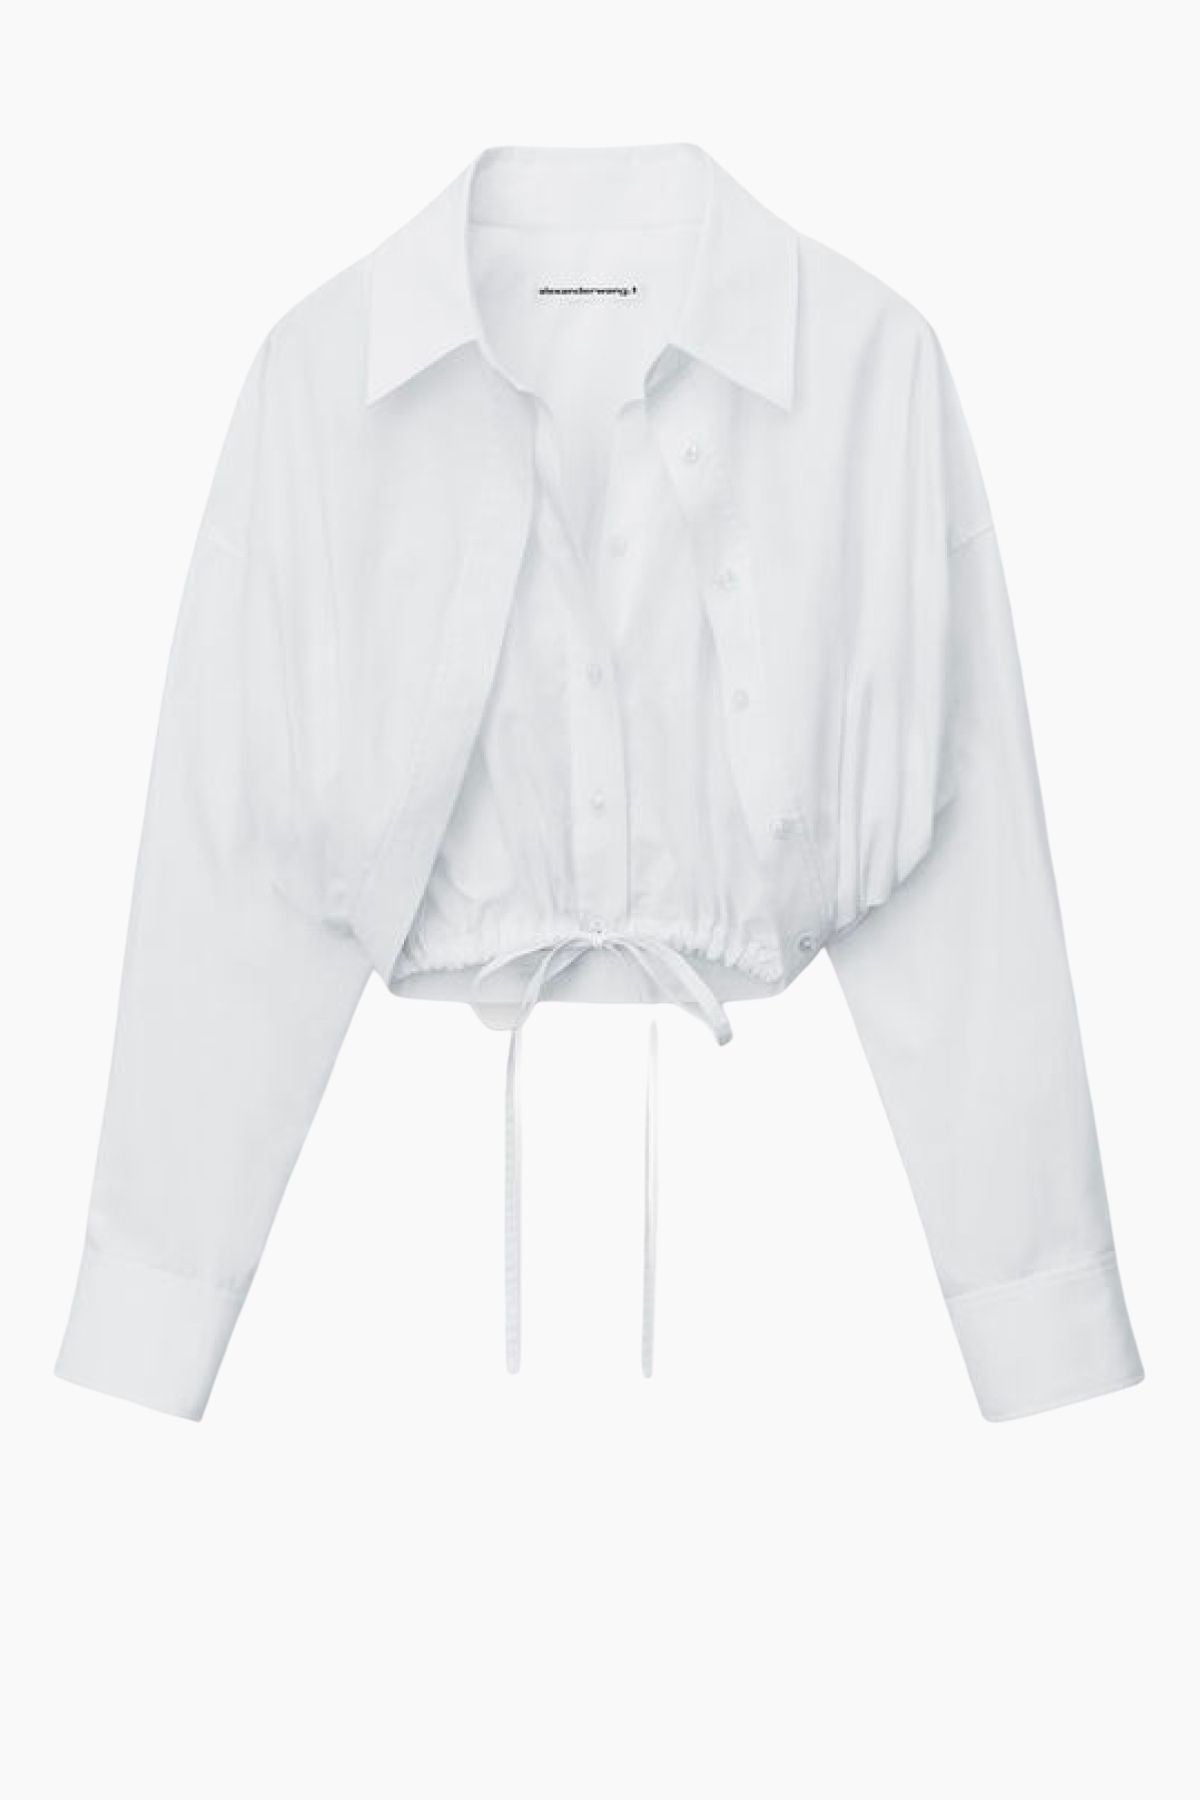 alexanderwang.t Double Layered Cropped Shirt - White